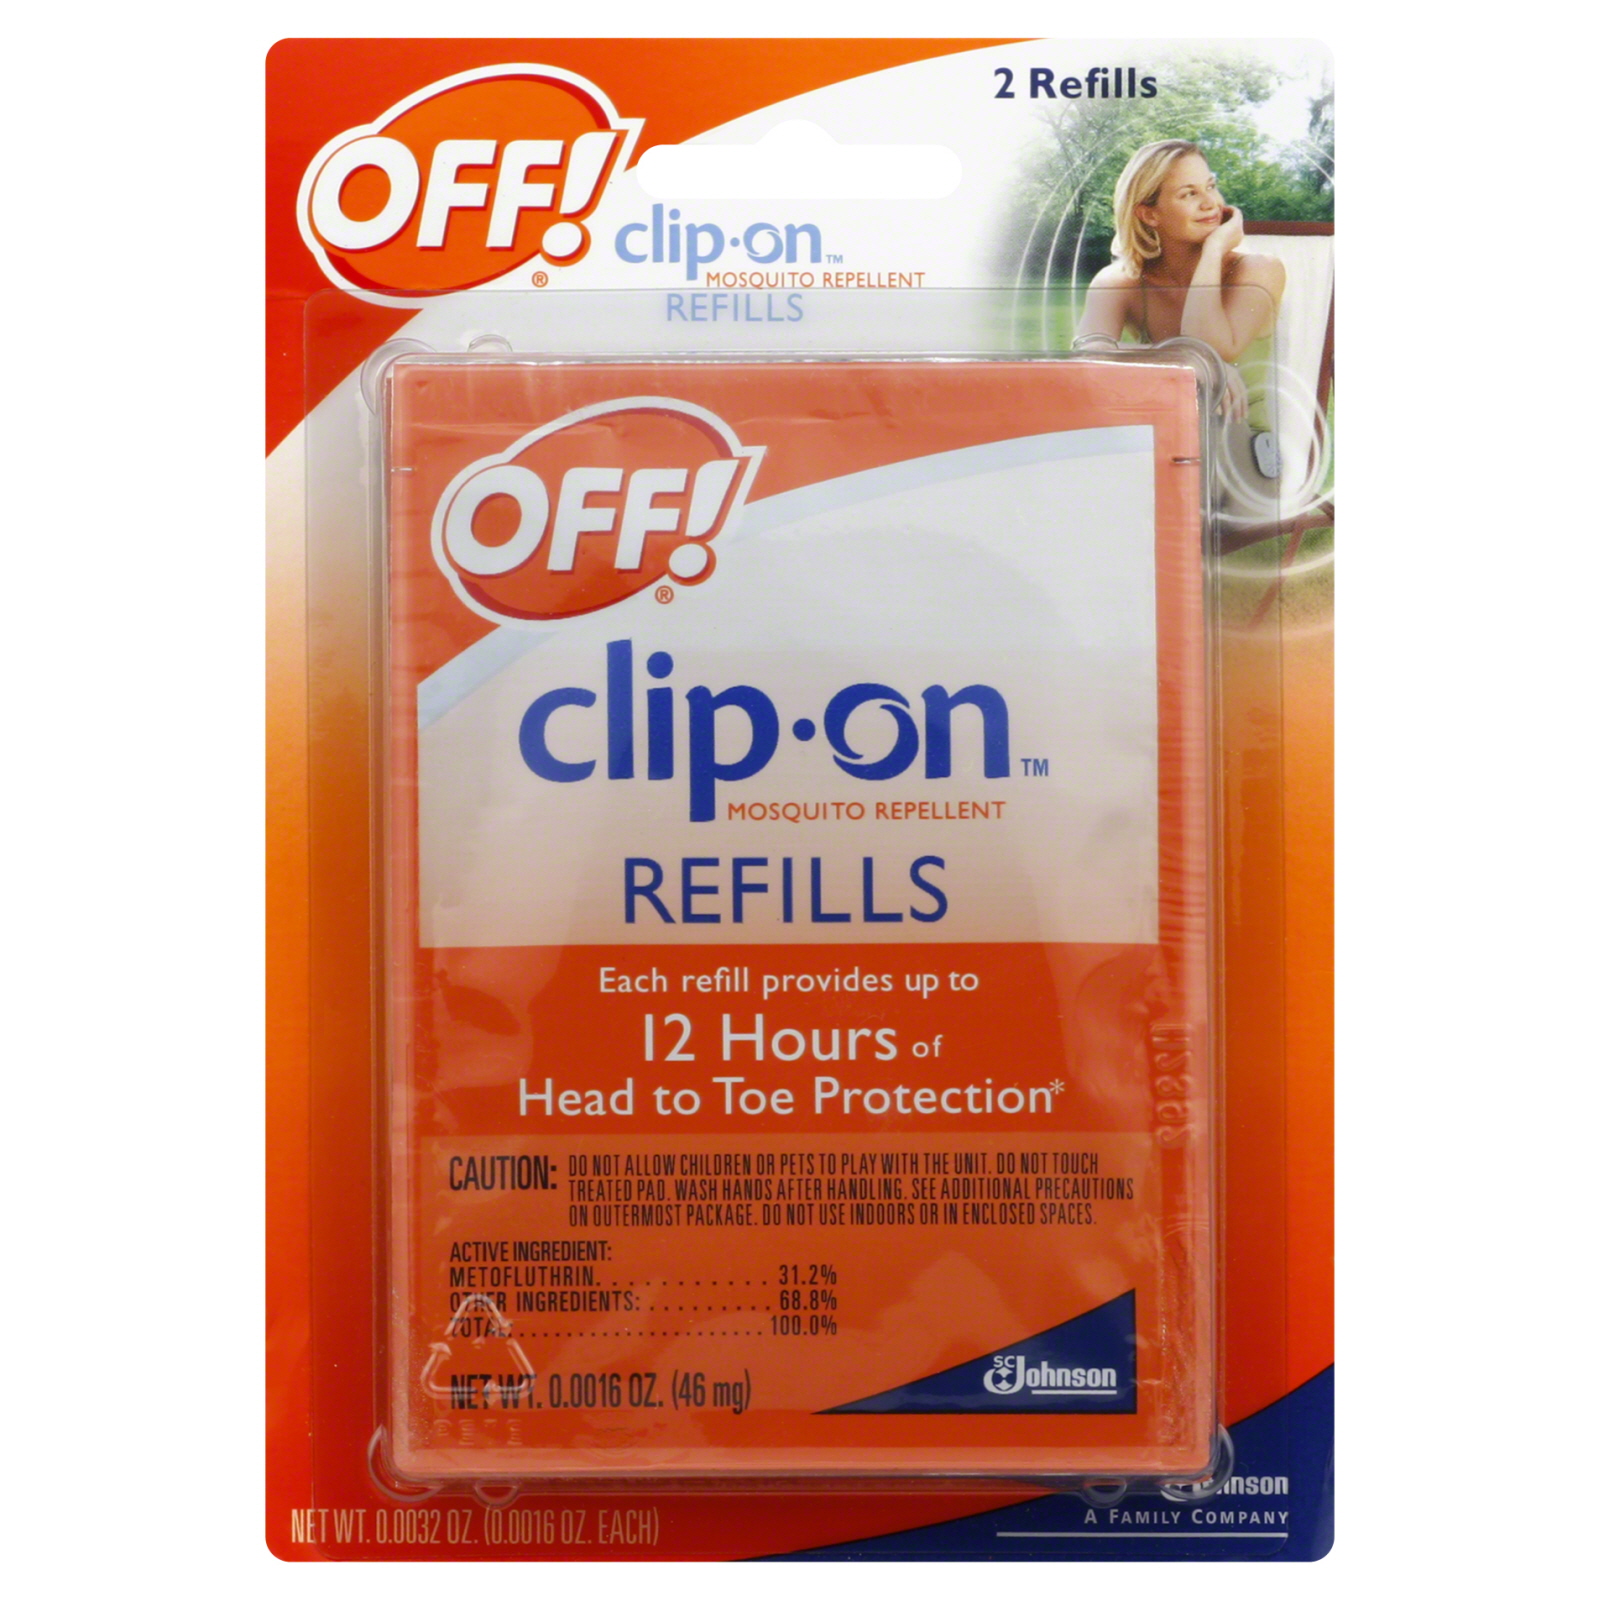 Off! Clip-On Mosquito Repellent Refills, 2 - 0.0016 oz (46 ml) refills [0.0032 oz]